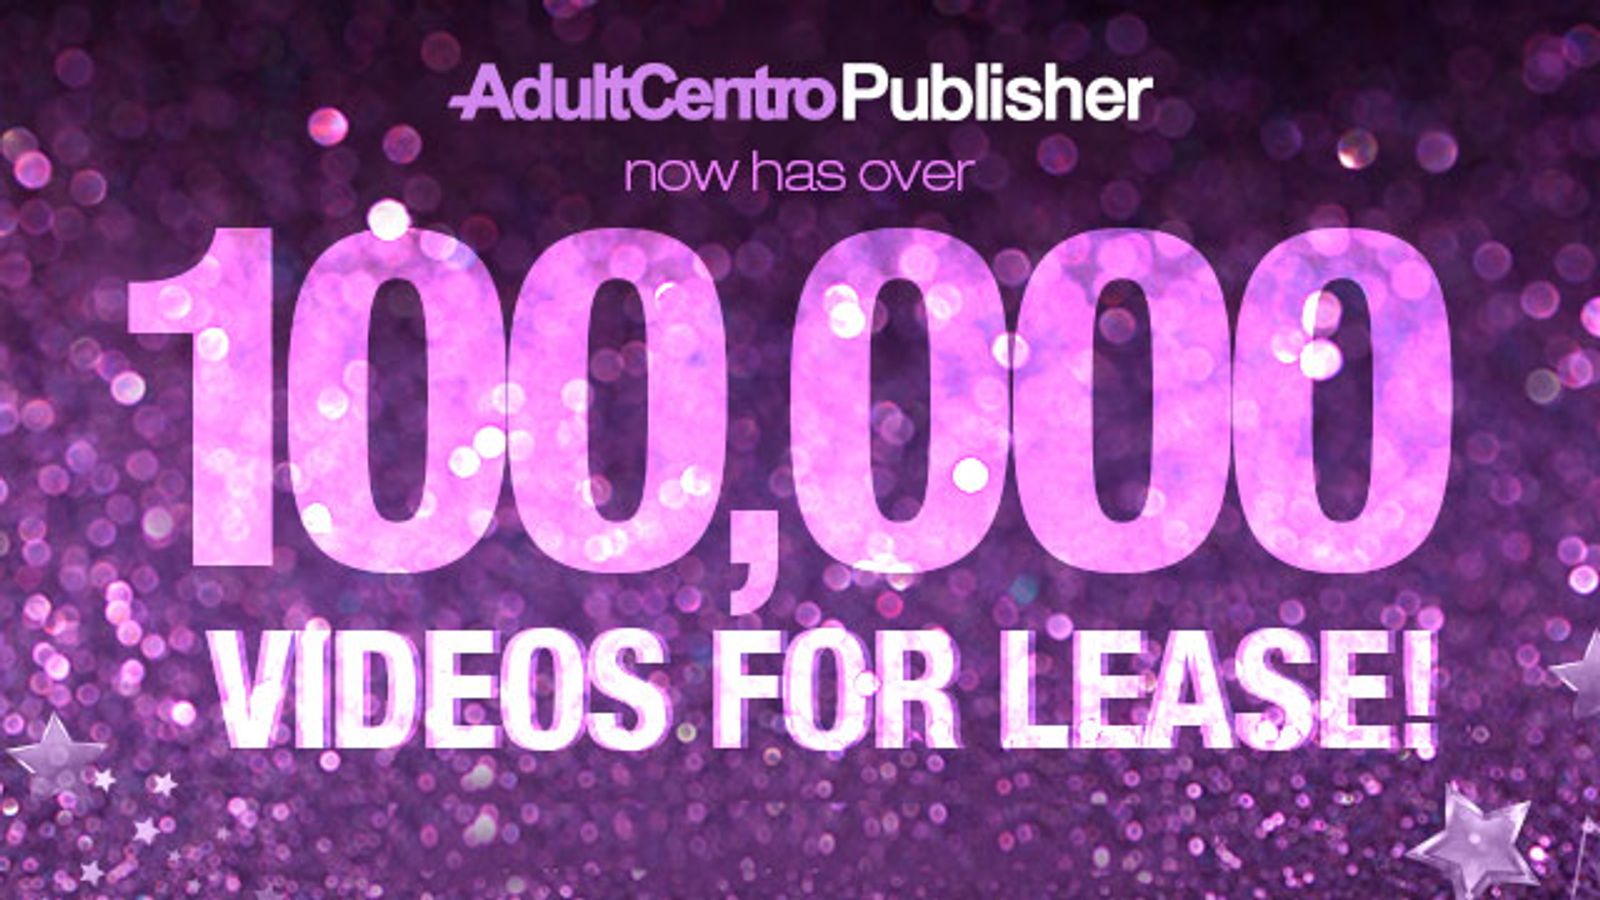 AdultCentro Publisher Platform Hits Milestone of 100,000 Videos